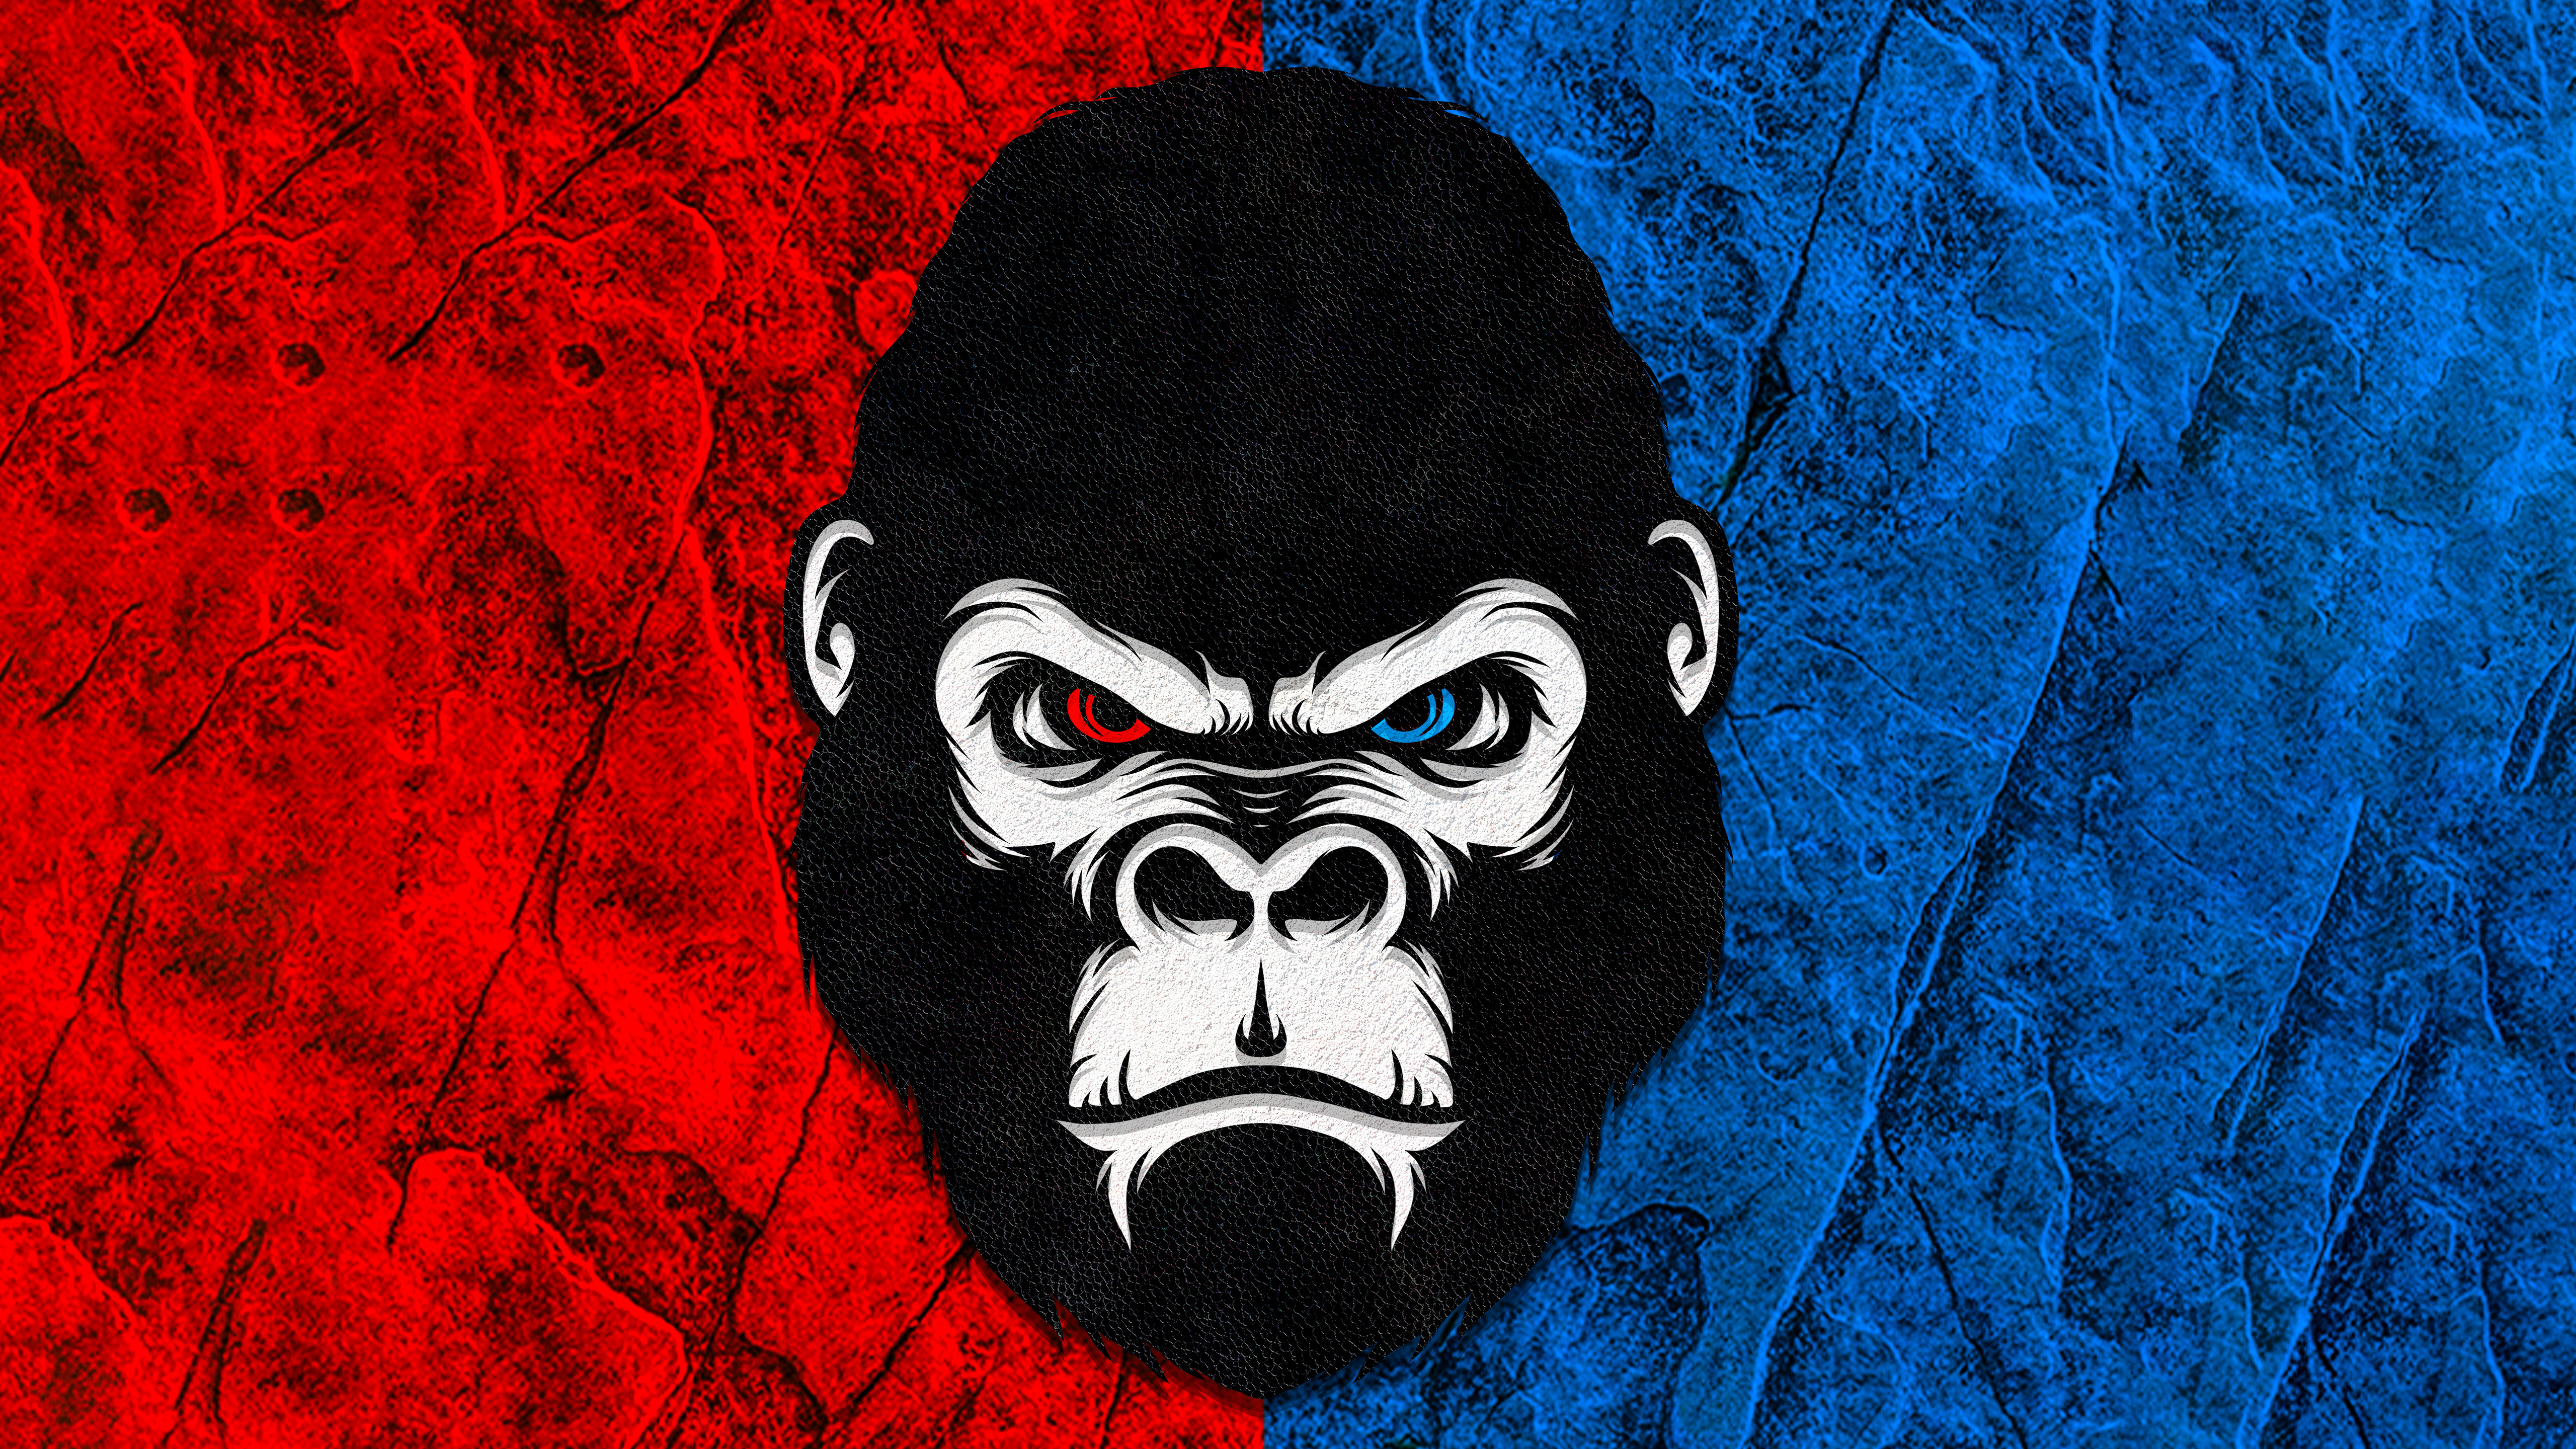 gorilla-red-blue-minimal-5k-hv.jpg